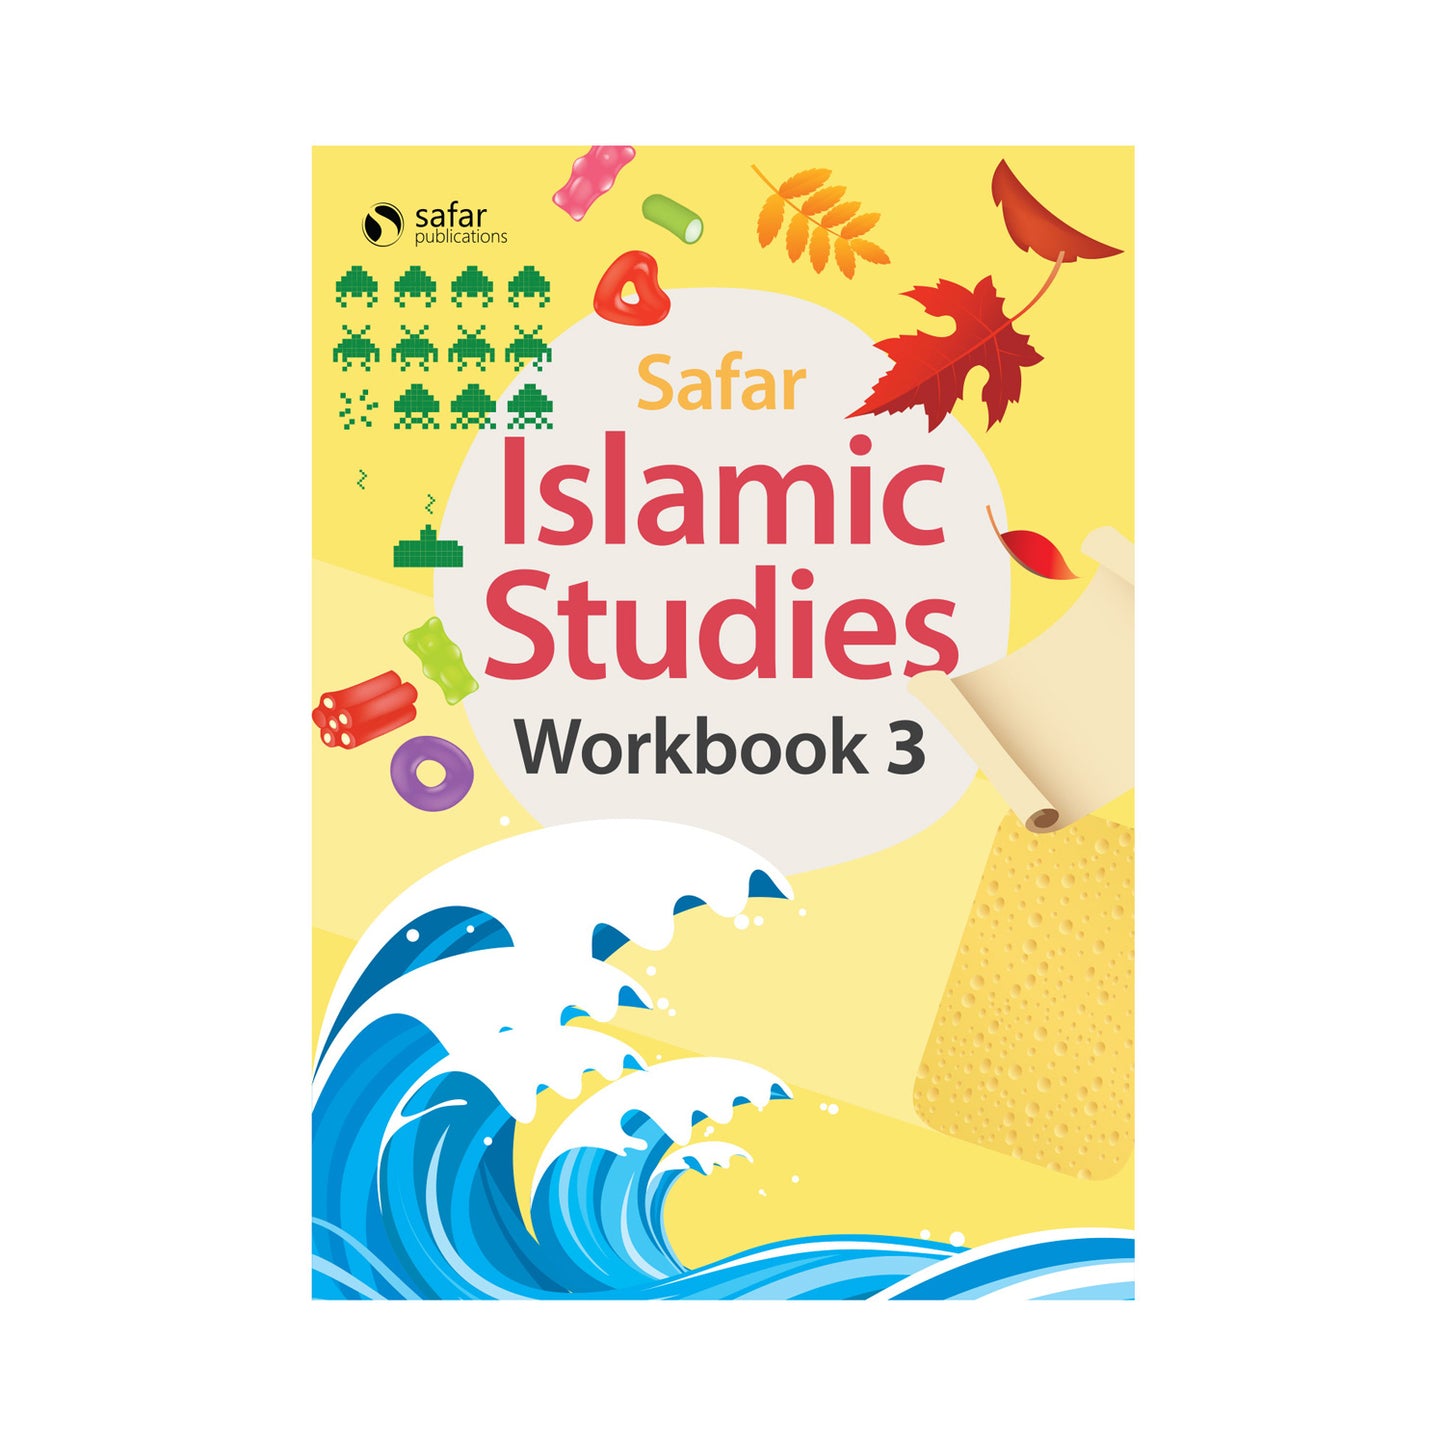 Islamic Studies: Workbook 3 – Learn about Islam Series by Safar